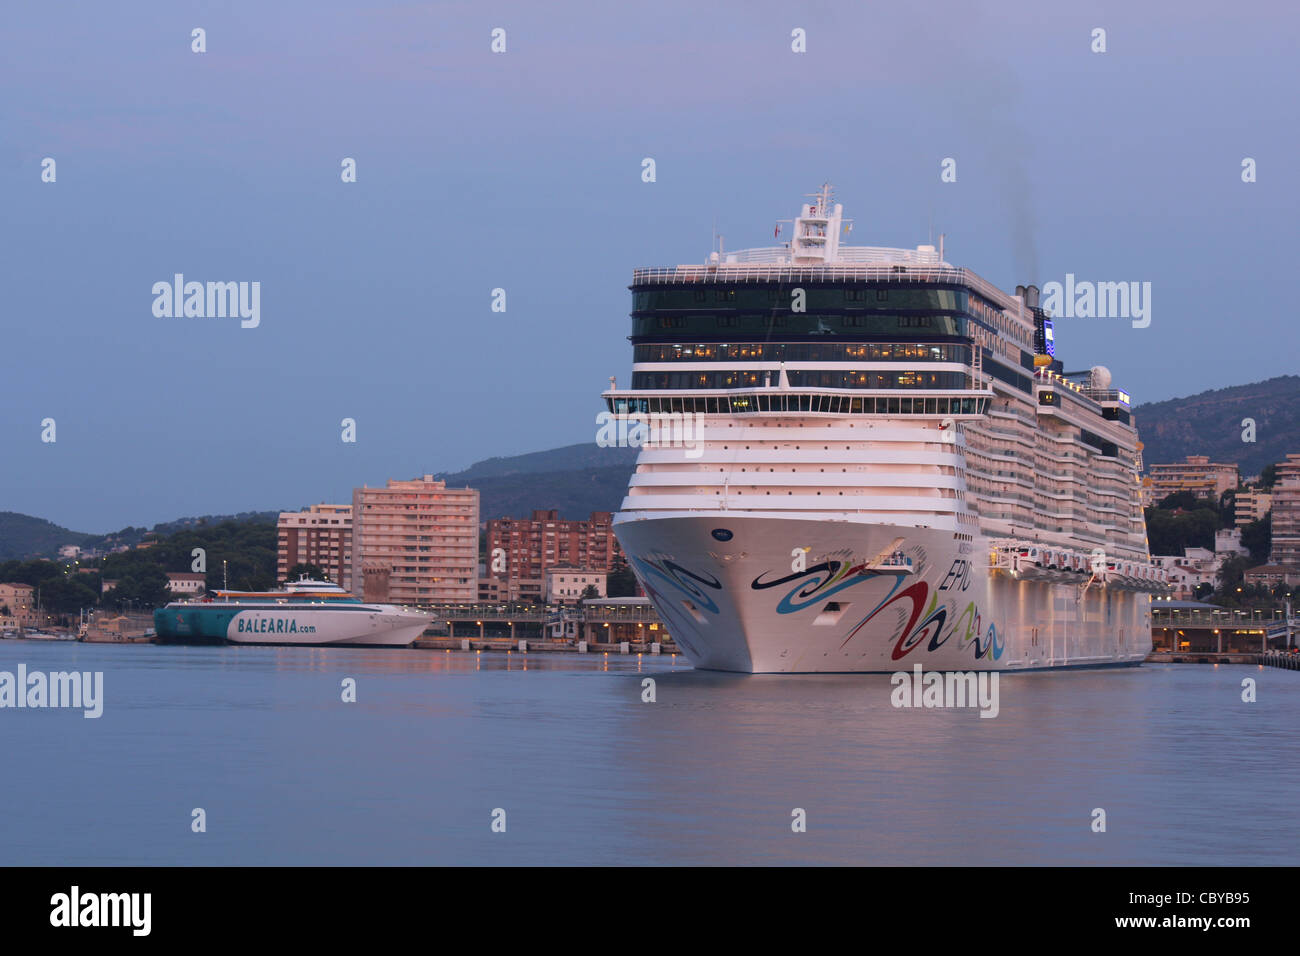 Pre dawn arrival - Norwegian Cruise Line (NCL) Cruise Liner 'Norwegian Epic' in Port of Palma de Mallorca Stock Photo